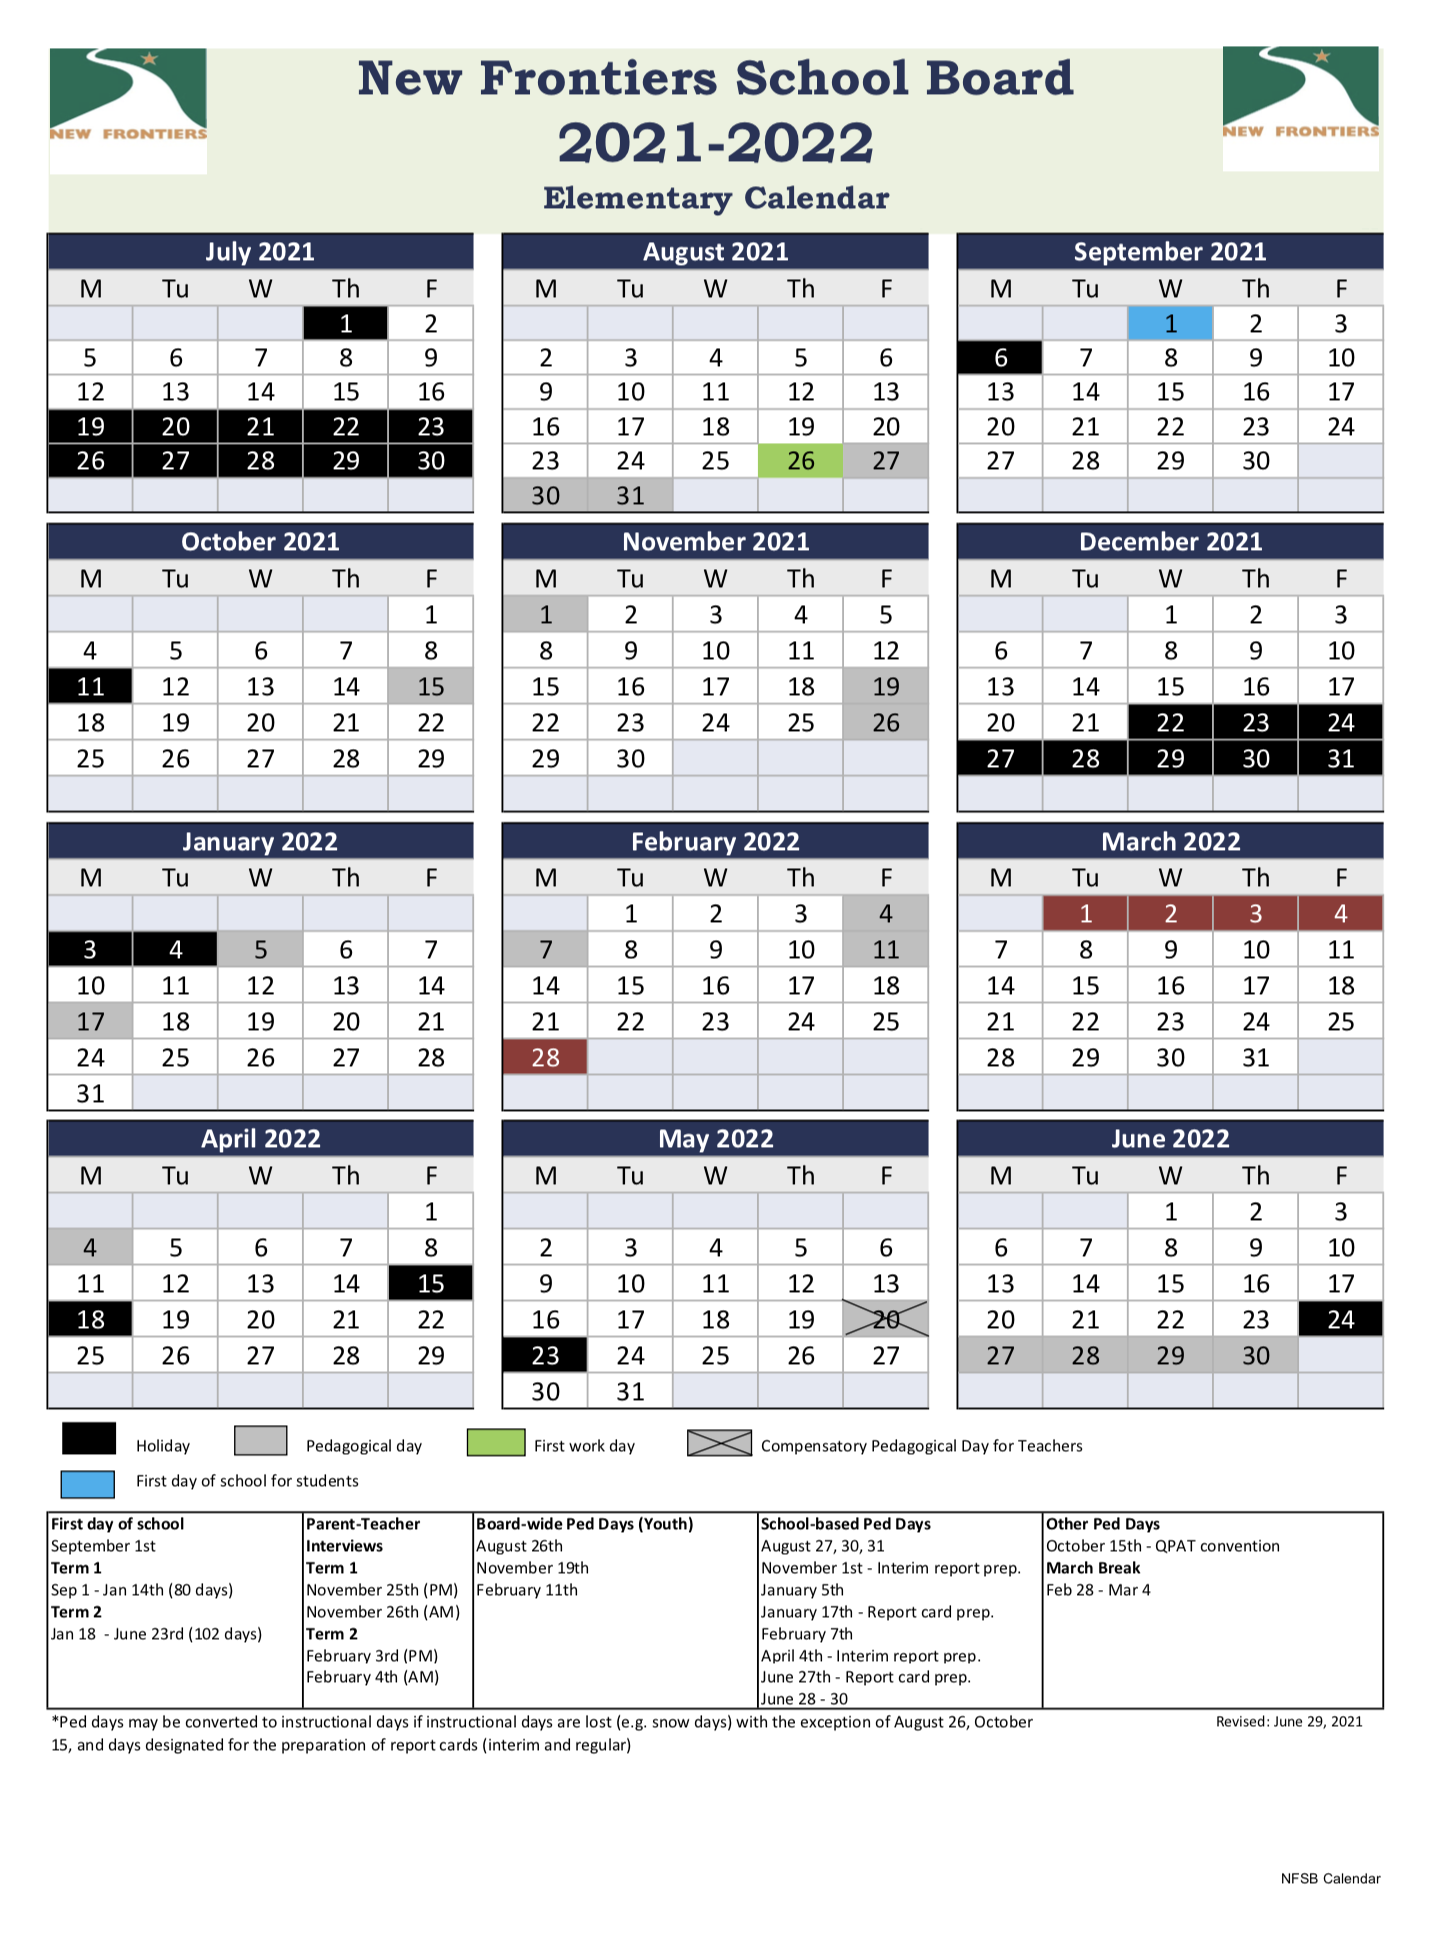 Plattsburgh Academic Calendar Spring 2022 Calendars - New Frontiers School Board